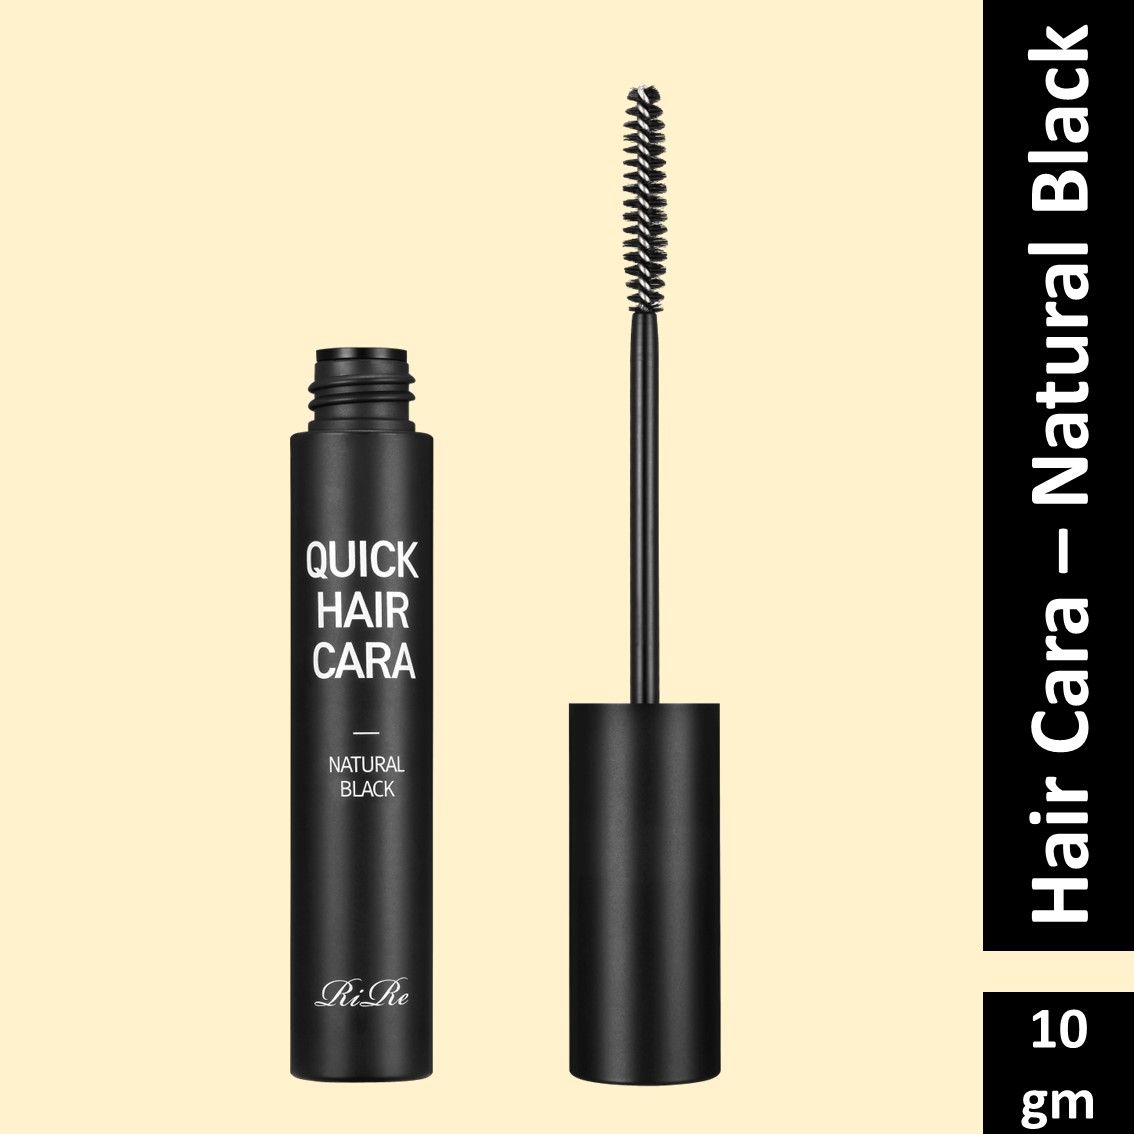 Buy RiRe Quick Hair Cara, Natural Black, 10g - Purplle